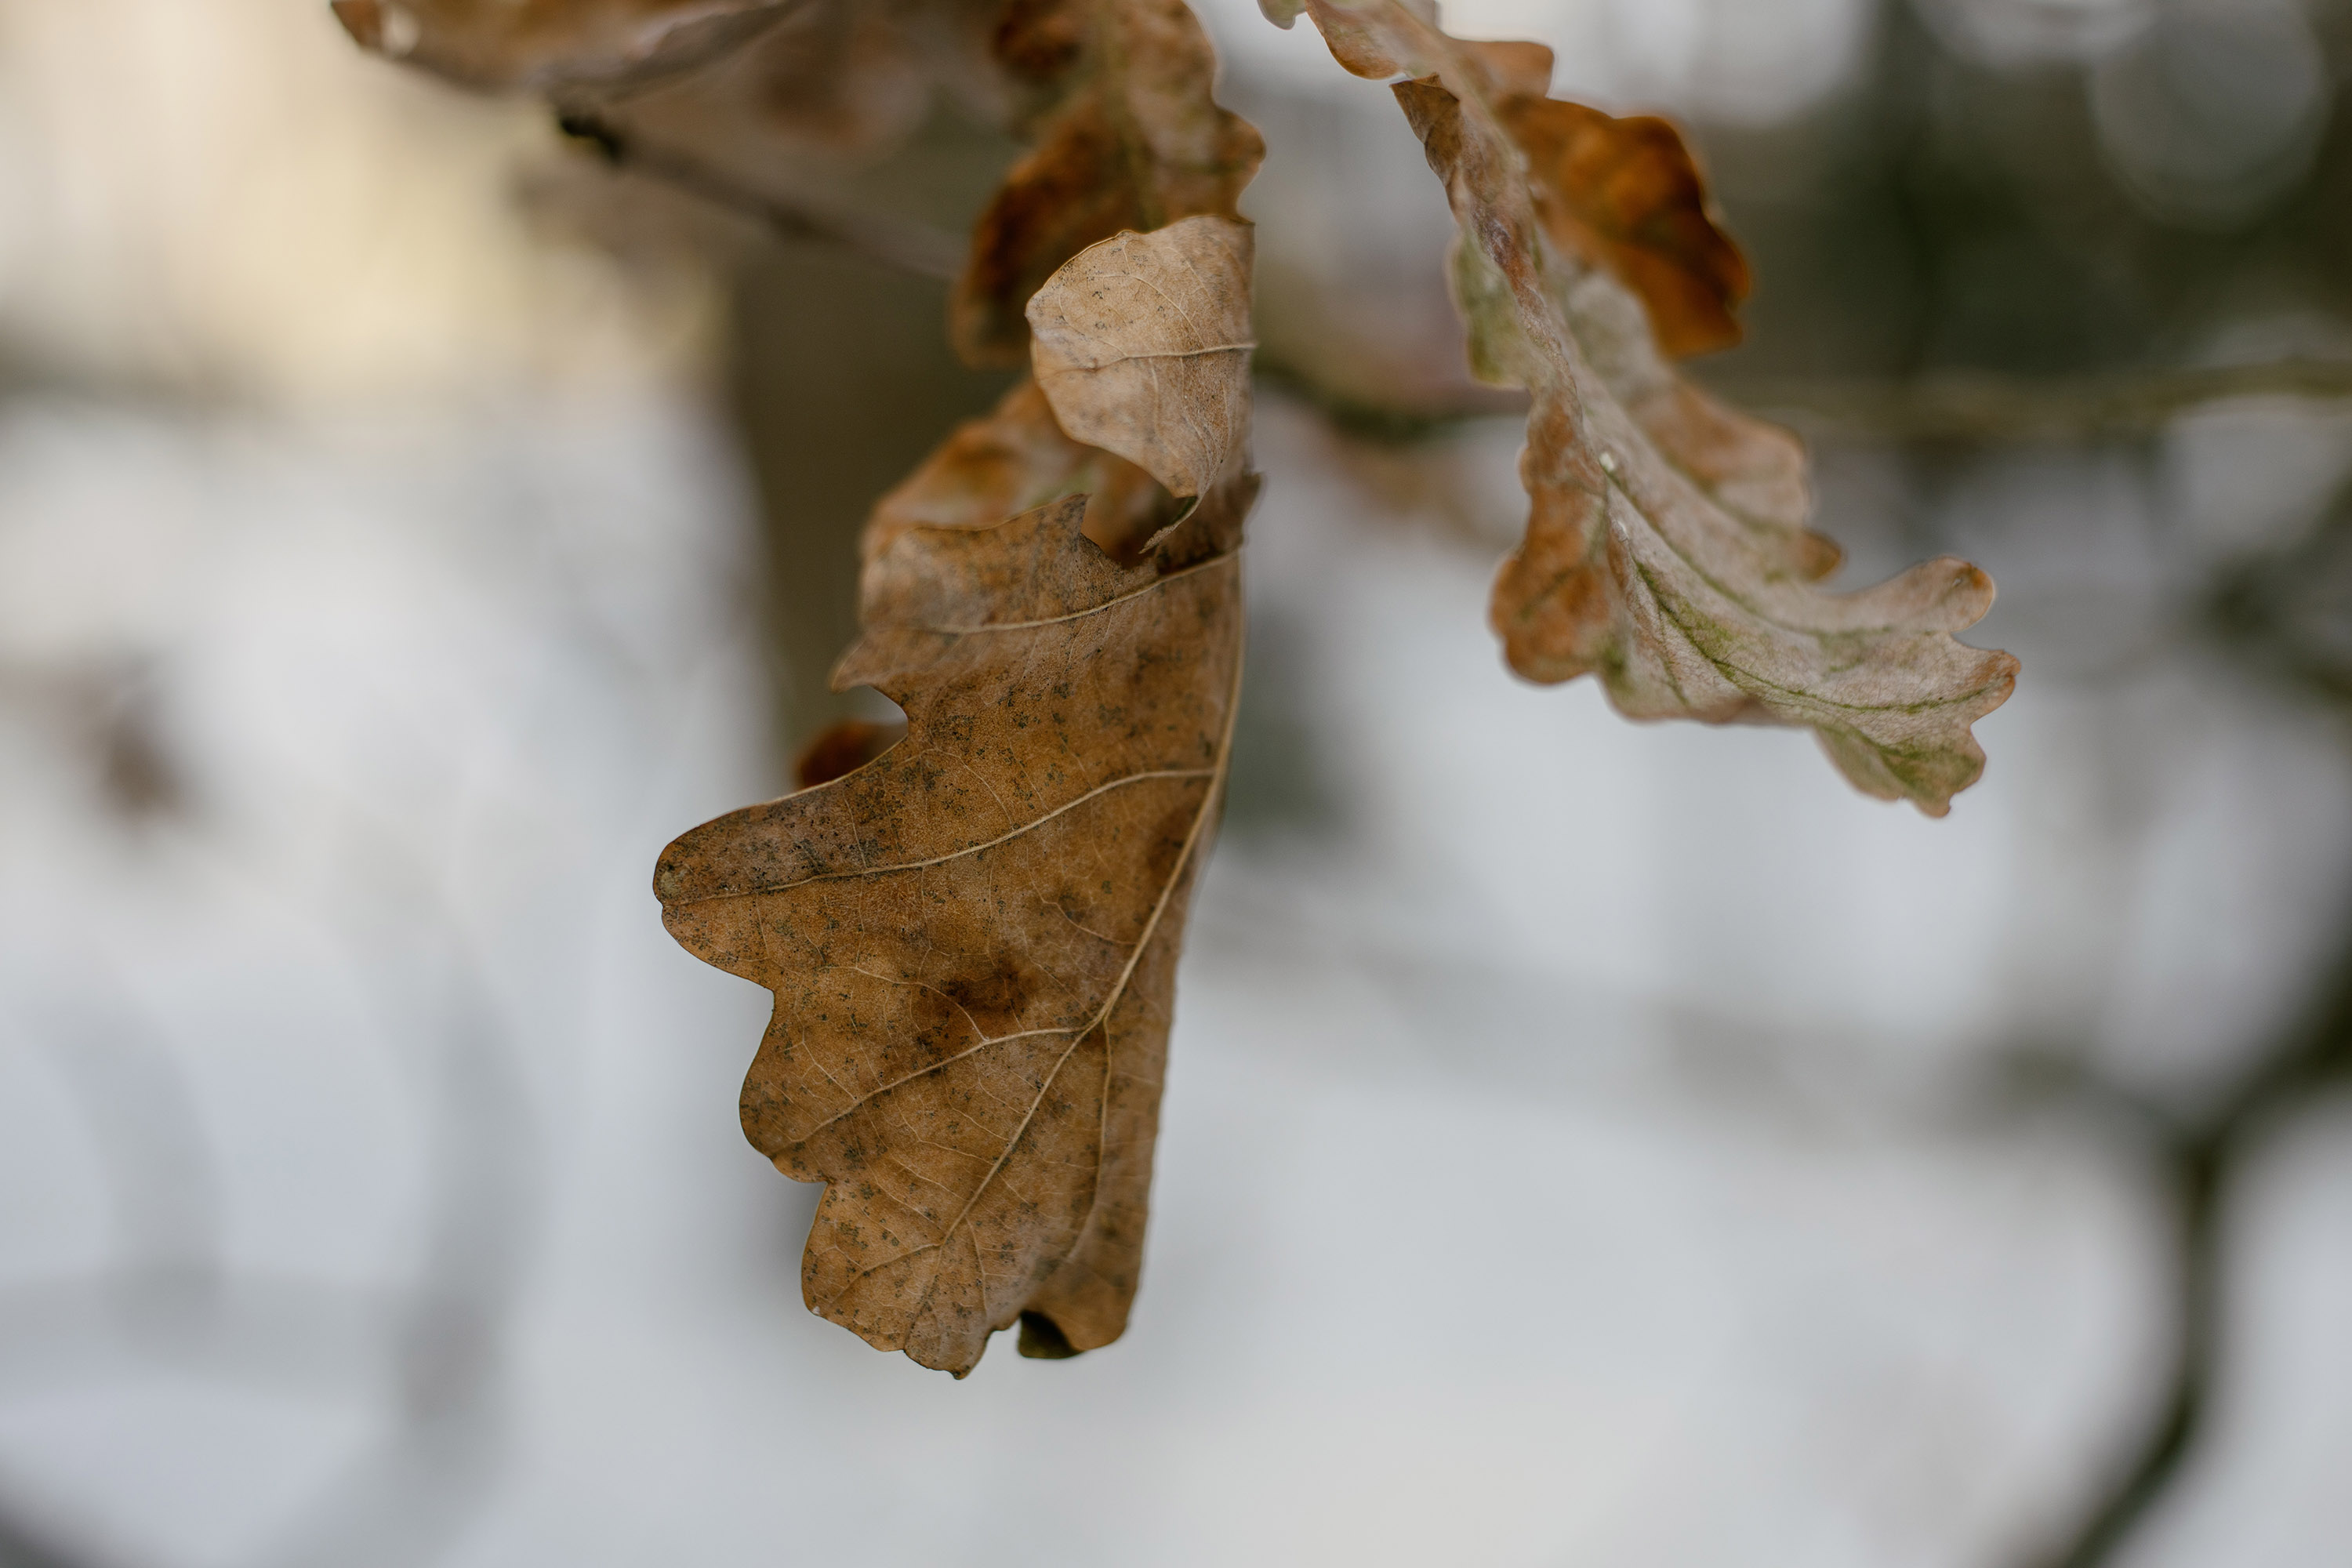 Dried oak leaf shot at a minimum focal distance. Contarex 50mm f2